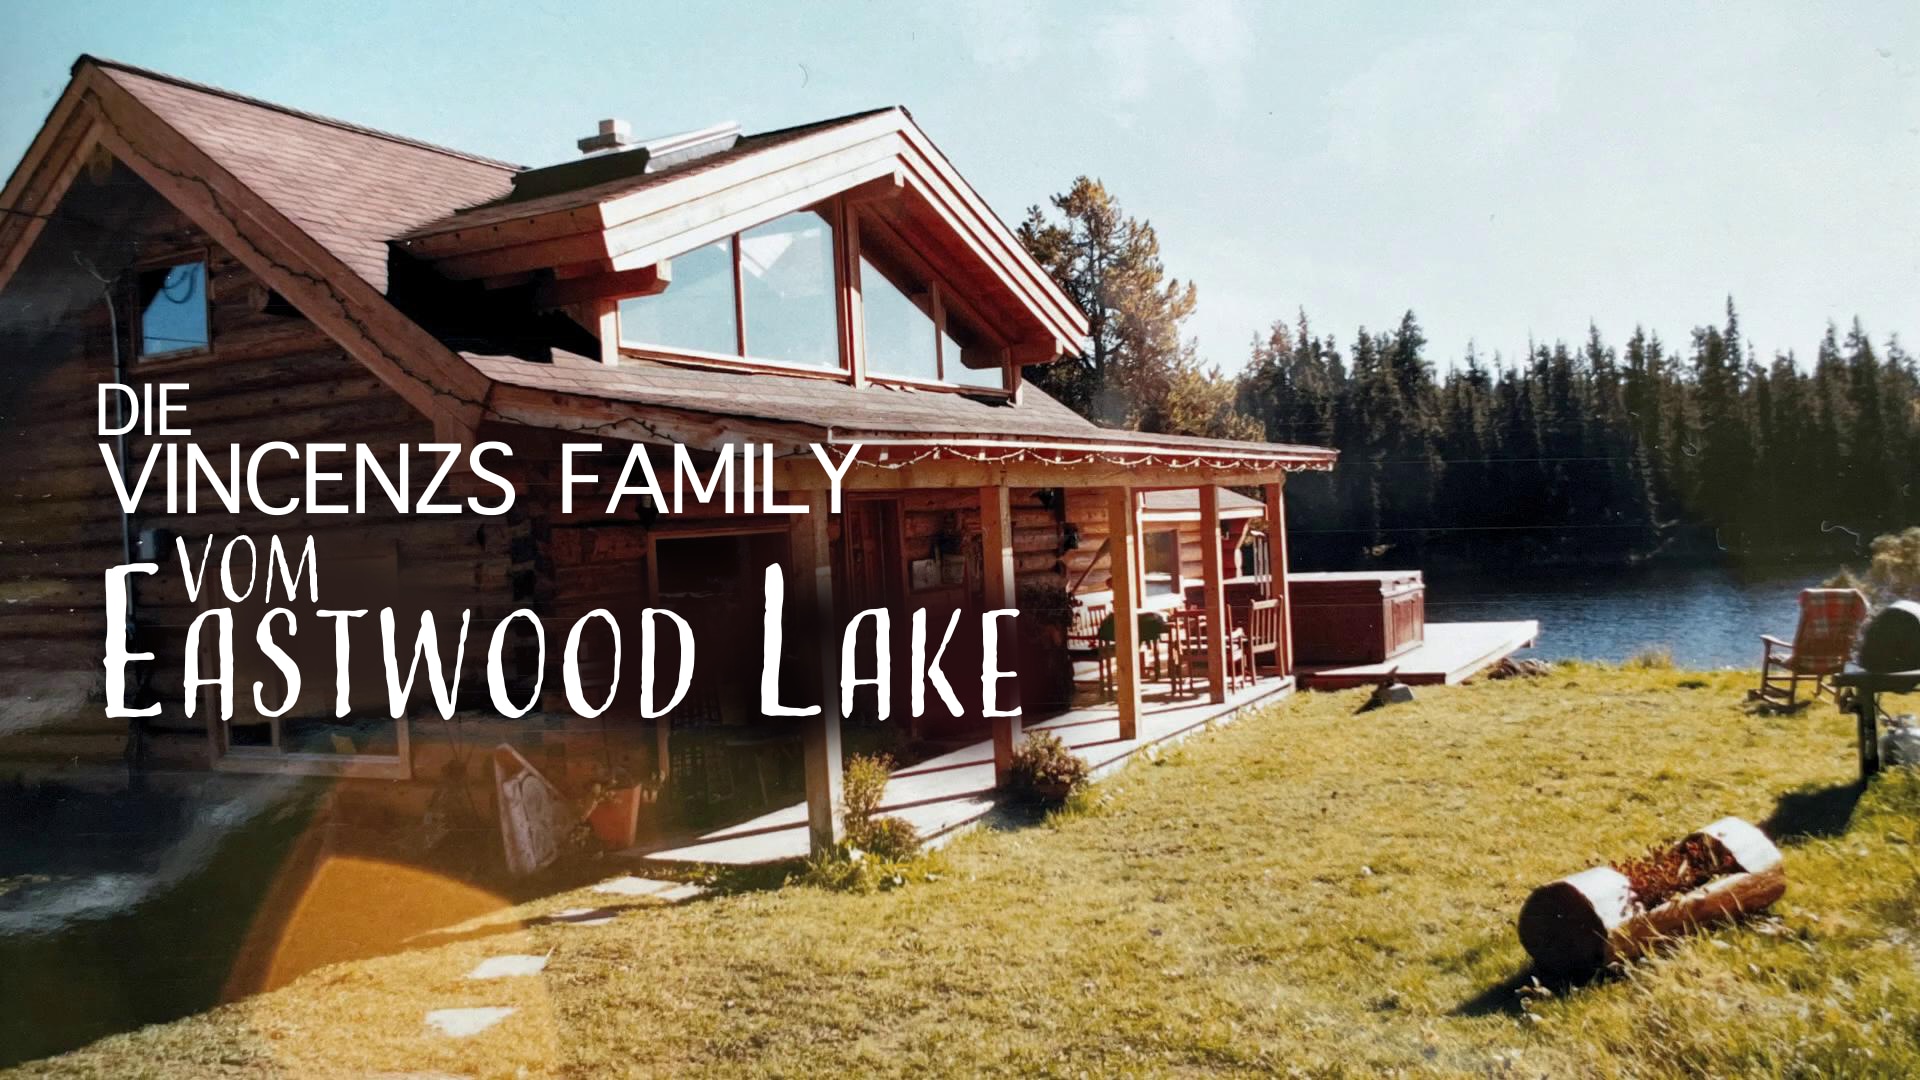 Die Vincenzs Family vom Eastwood Lake